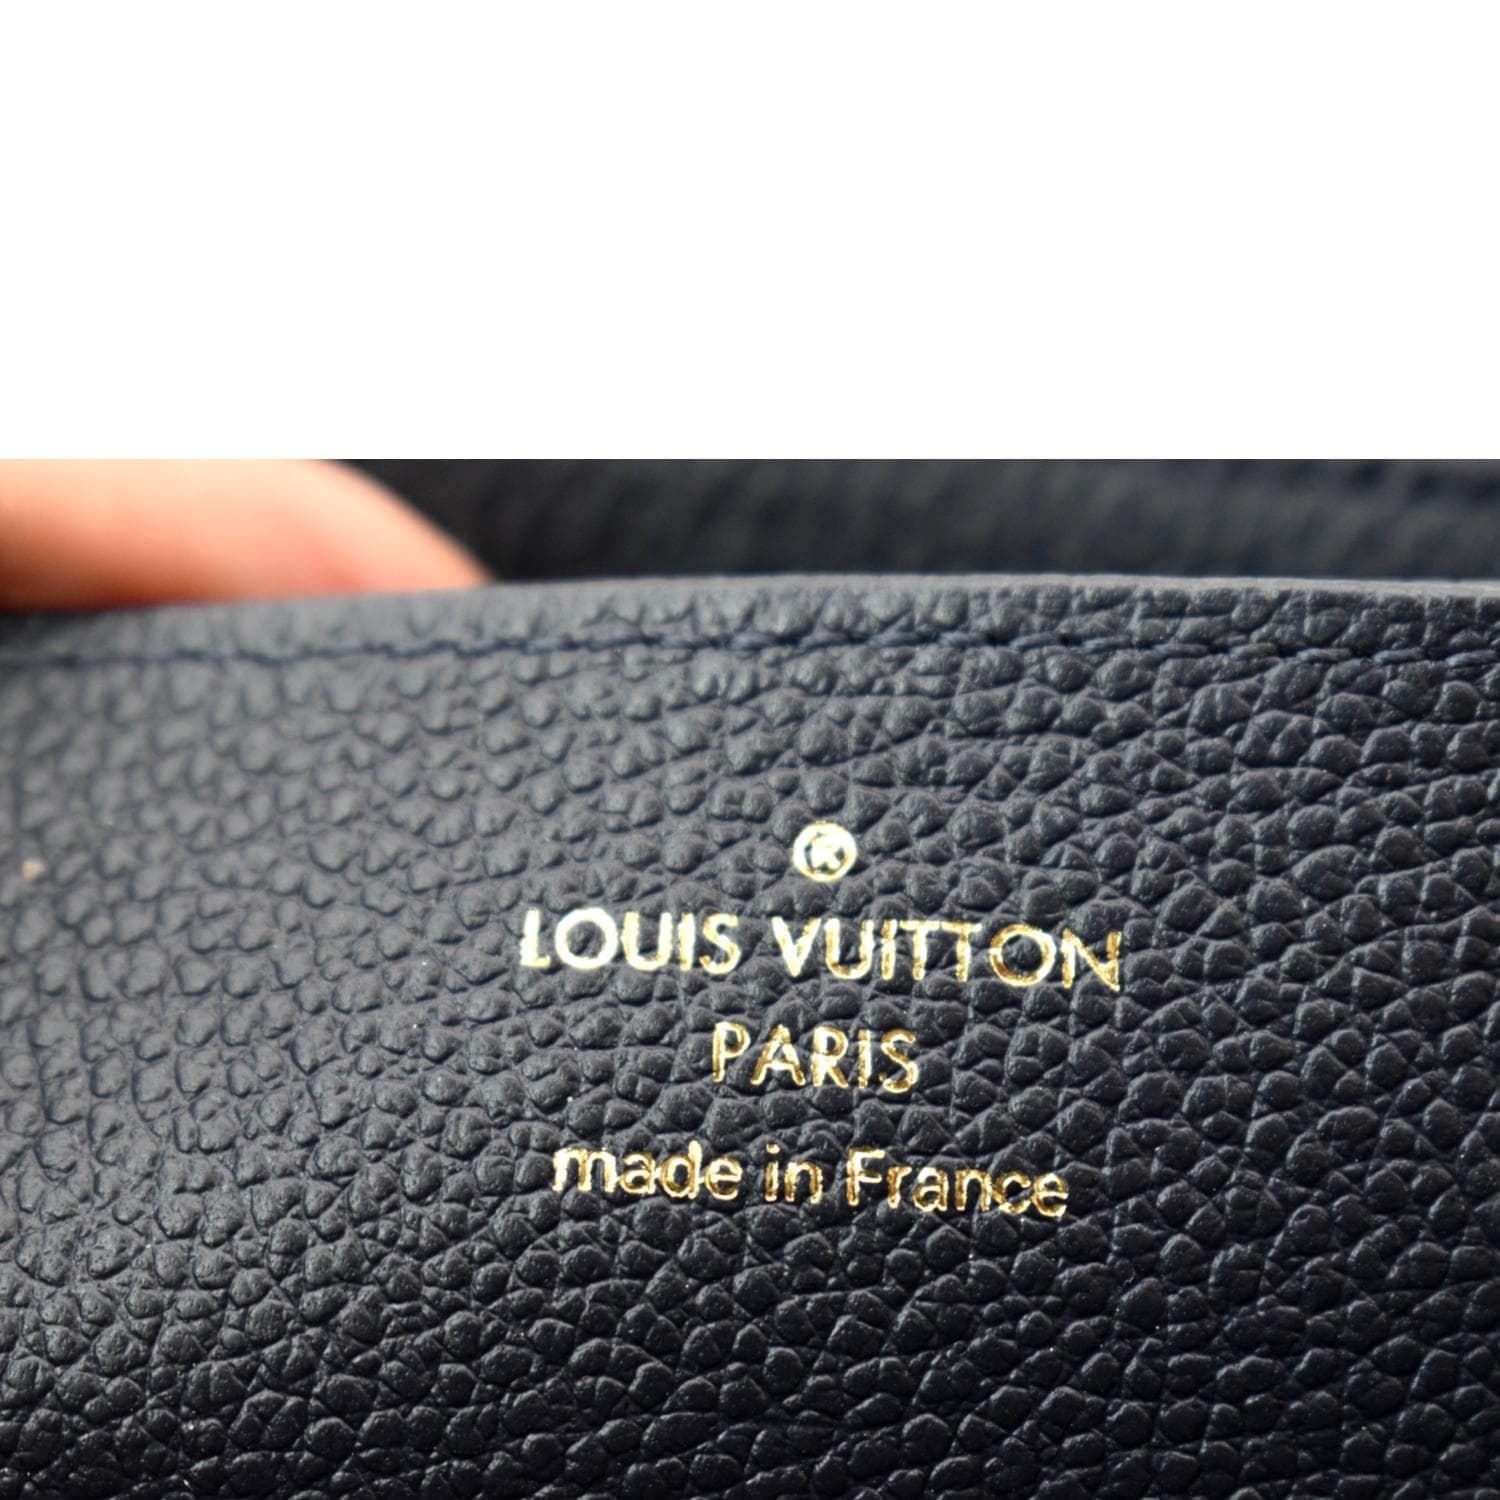 Louis Vuitton Wallet (Laredo, TX)